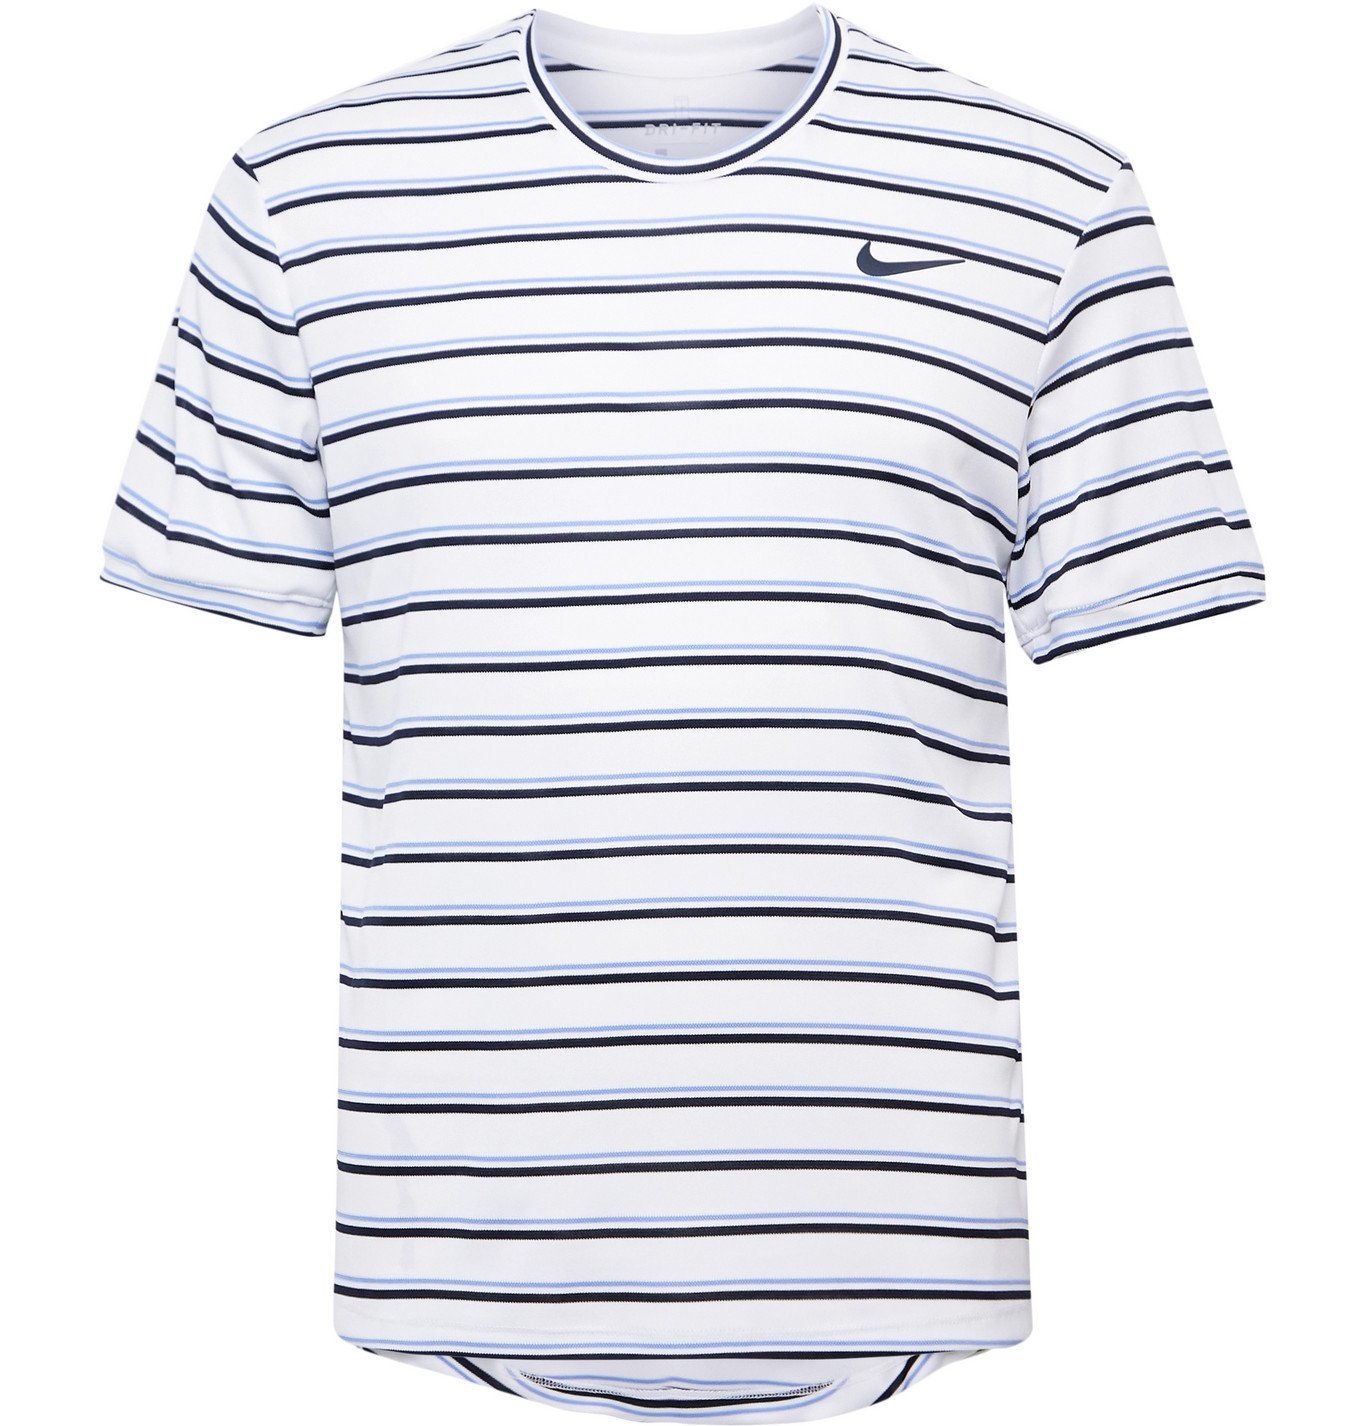 Nike Tennis - NikeCourt Striped Dri-FIT Tennis T-Shirt - White 